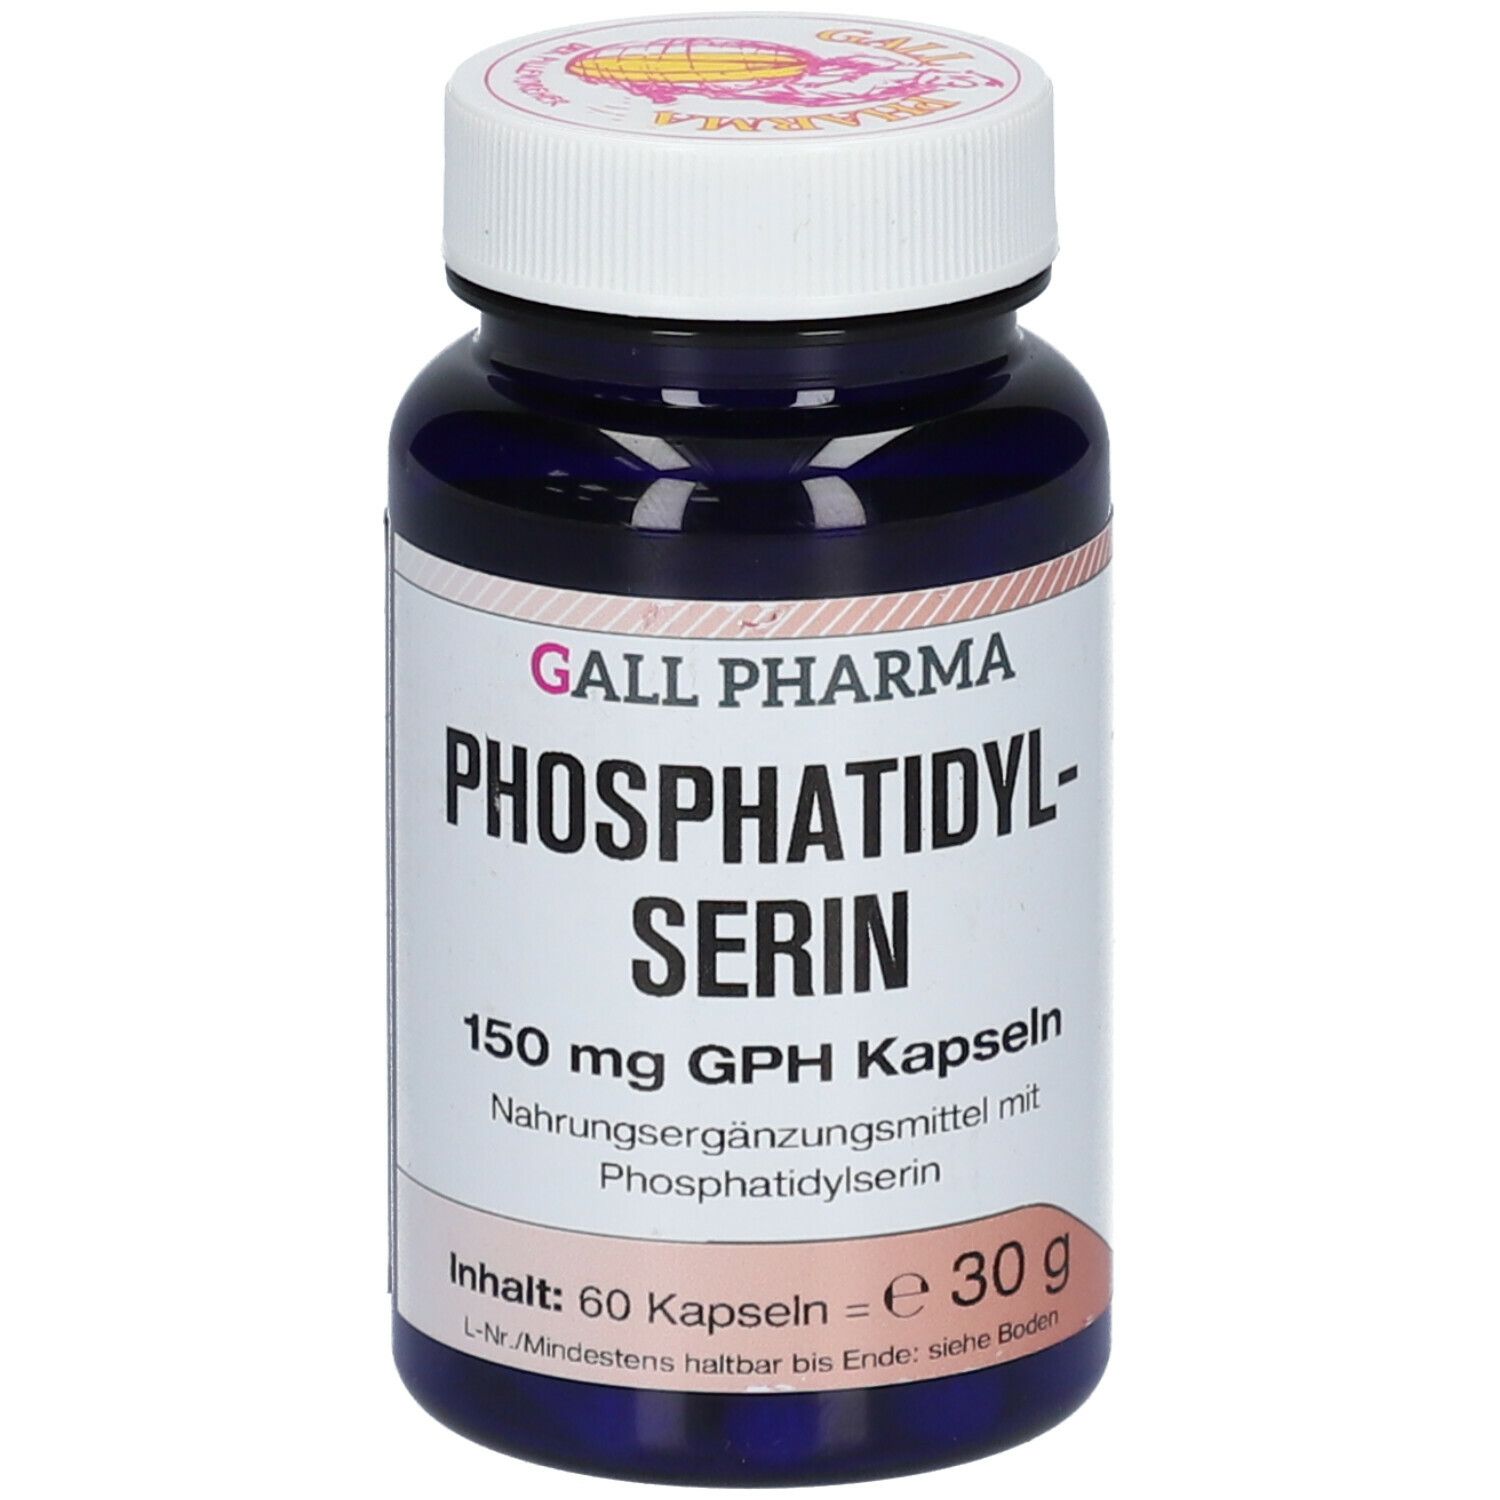 Gall Pharma Phosphatidyl-Serin 150 mg GPH Kapseln